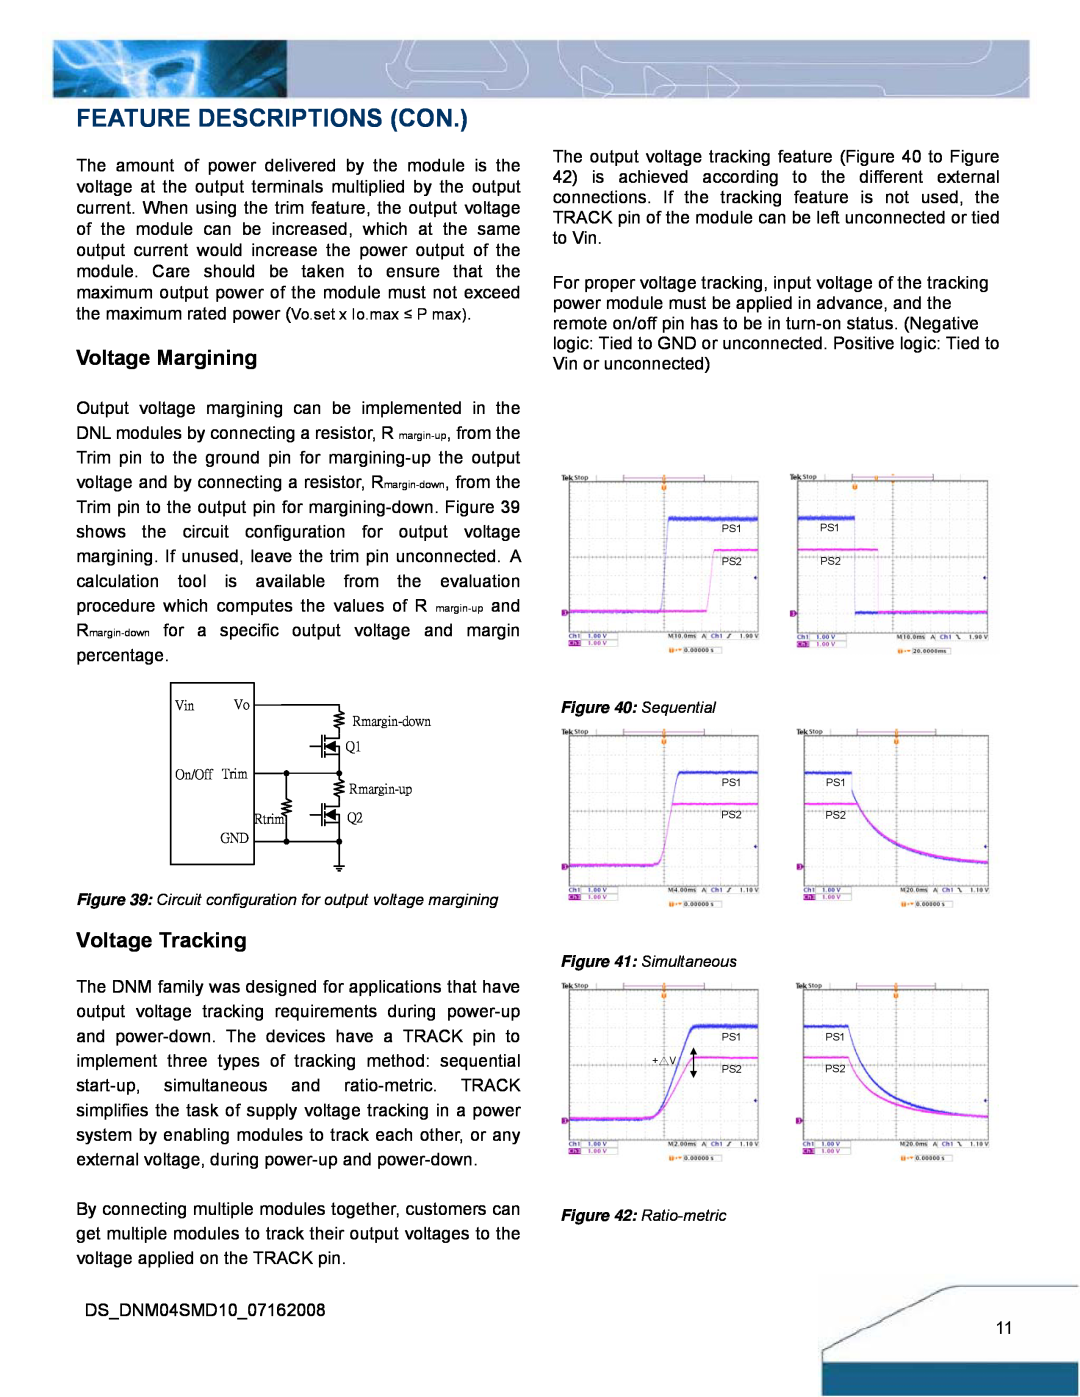 Delta Electronics 2.8-5.5Vin, 10A, 0.75-3.3V manual Feature Descriptions Con, Voltage Margining, Voltage Tracking 